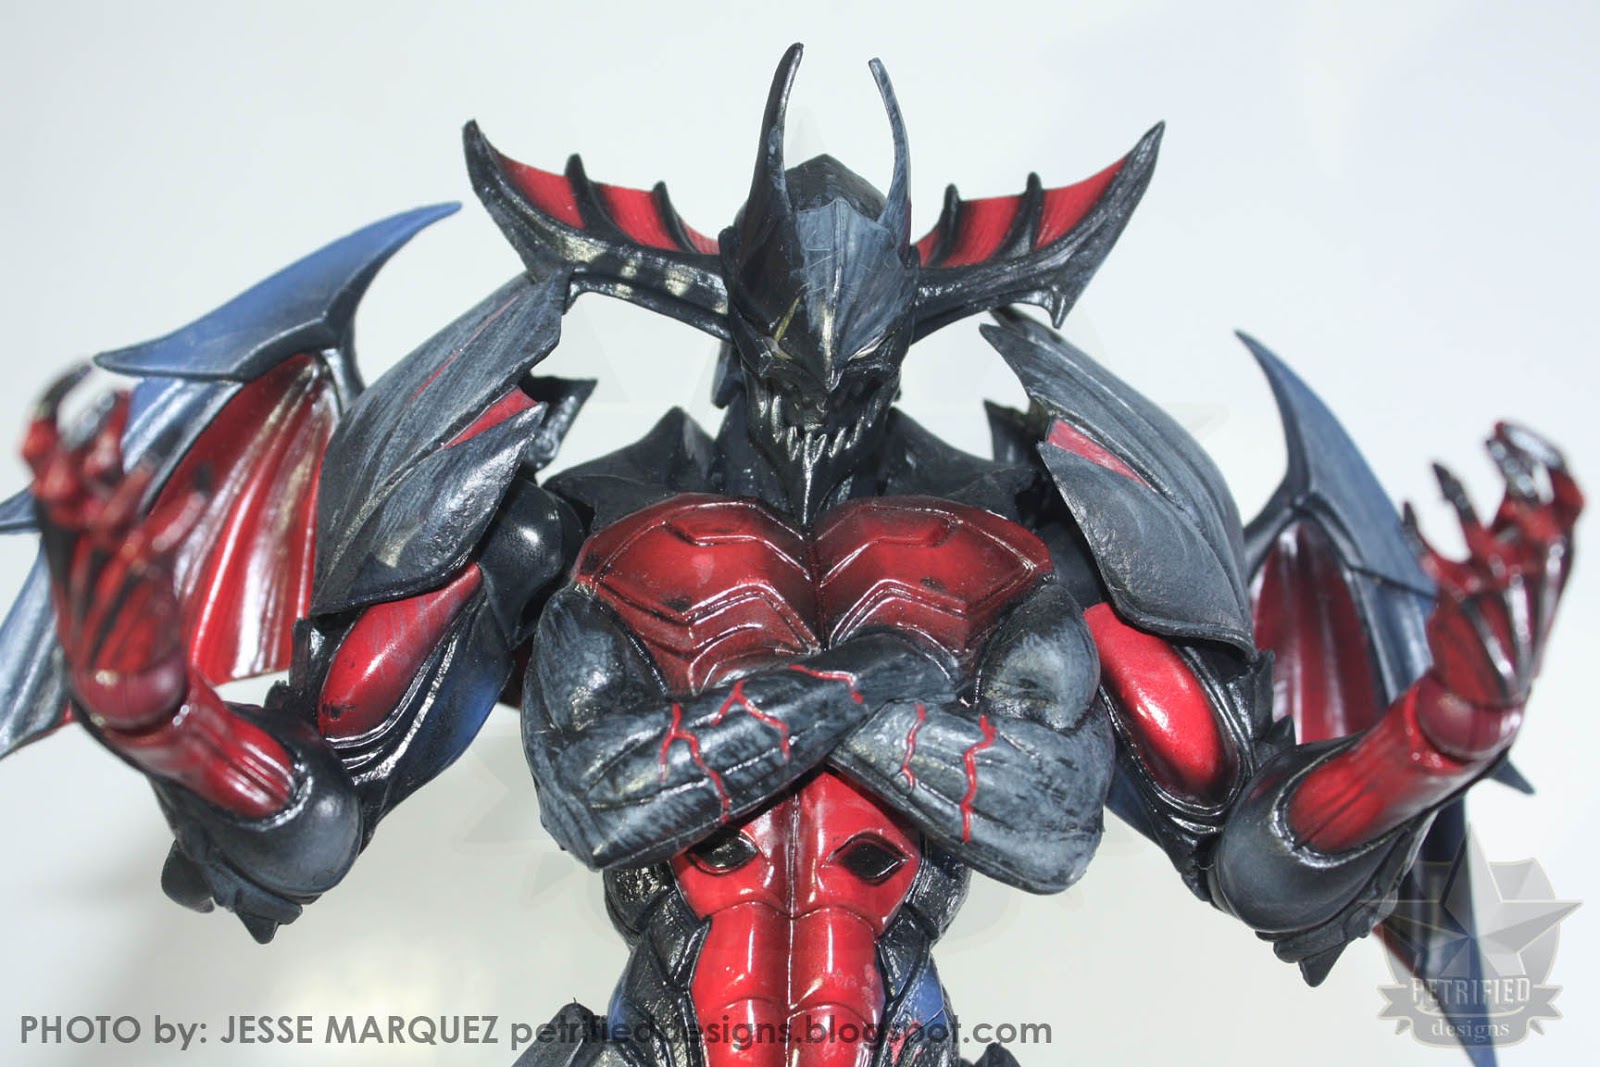 Play Arts Kai Monster Hunter X Diablos Armor Rage Series Square Enix